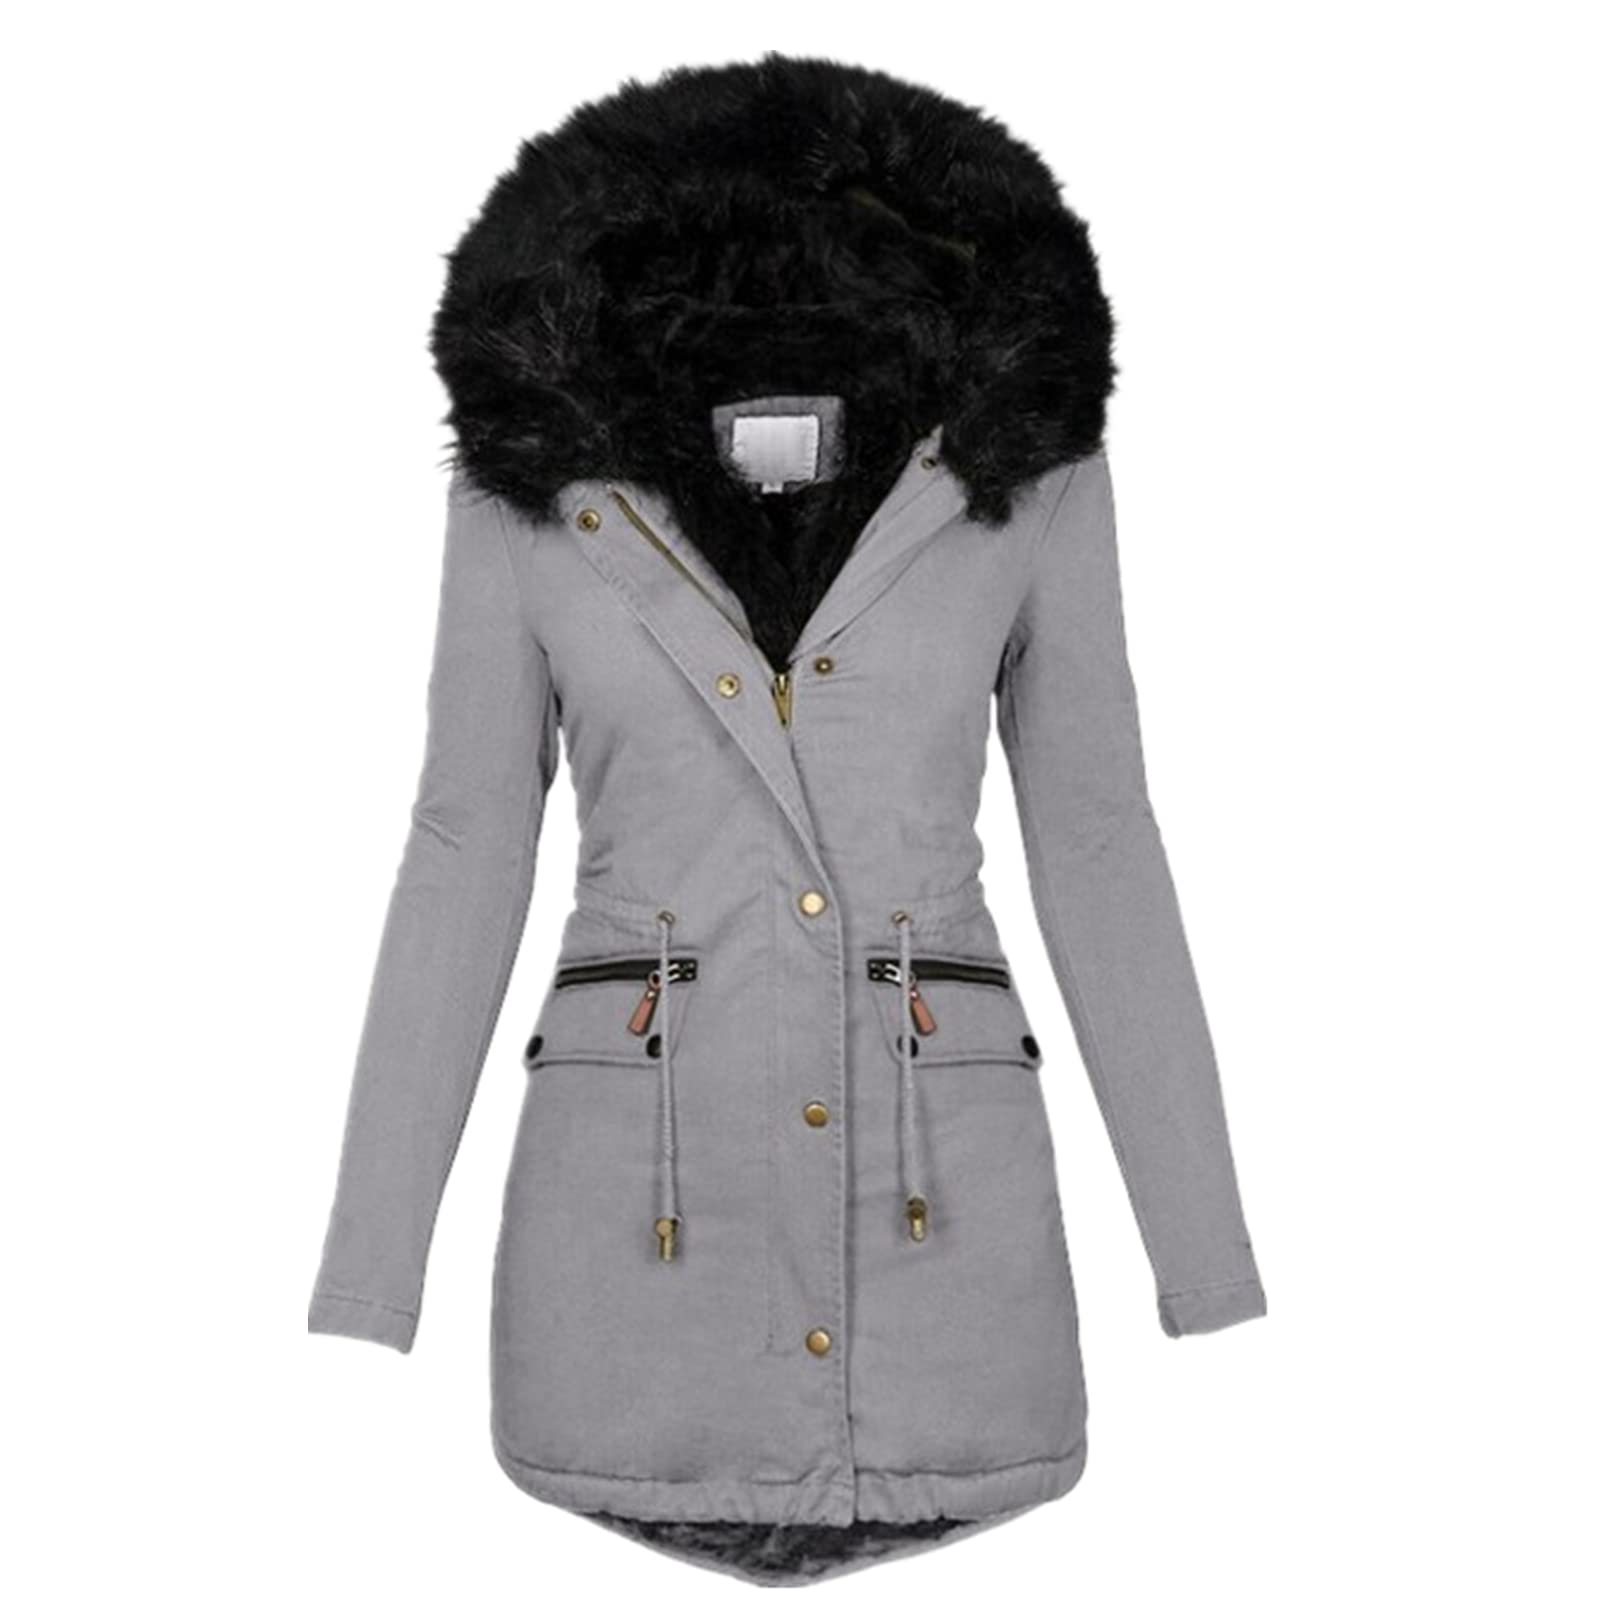 Reemelody New women's slim hooded mid-length warm zipper cotton coat